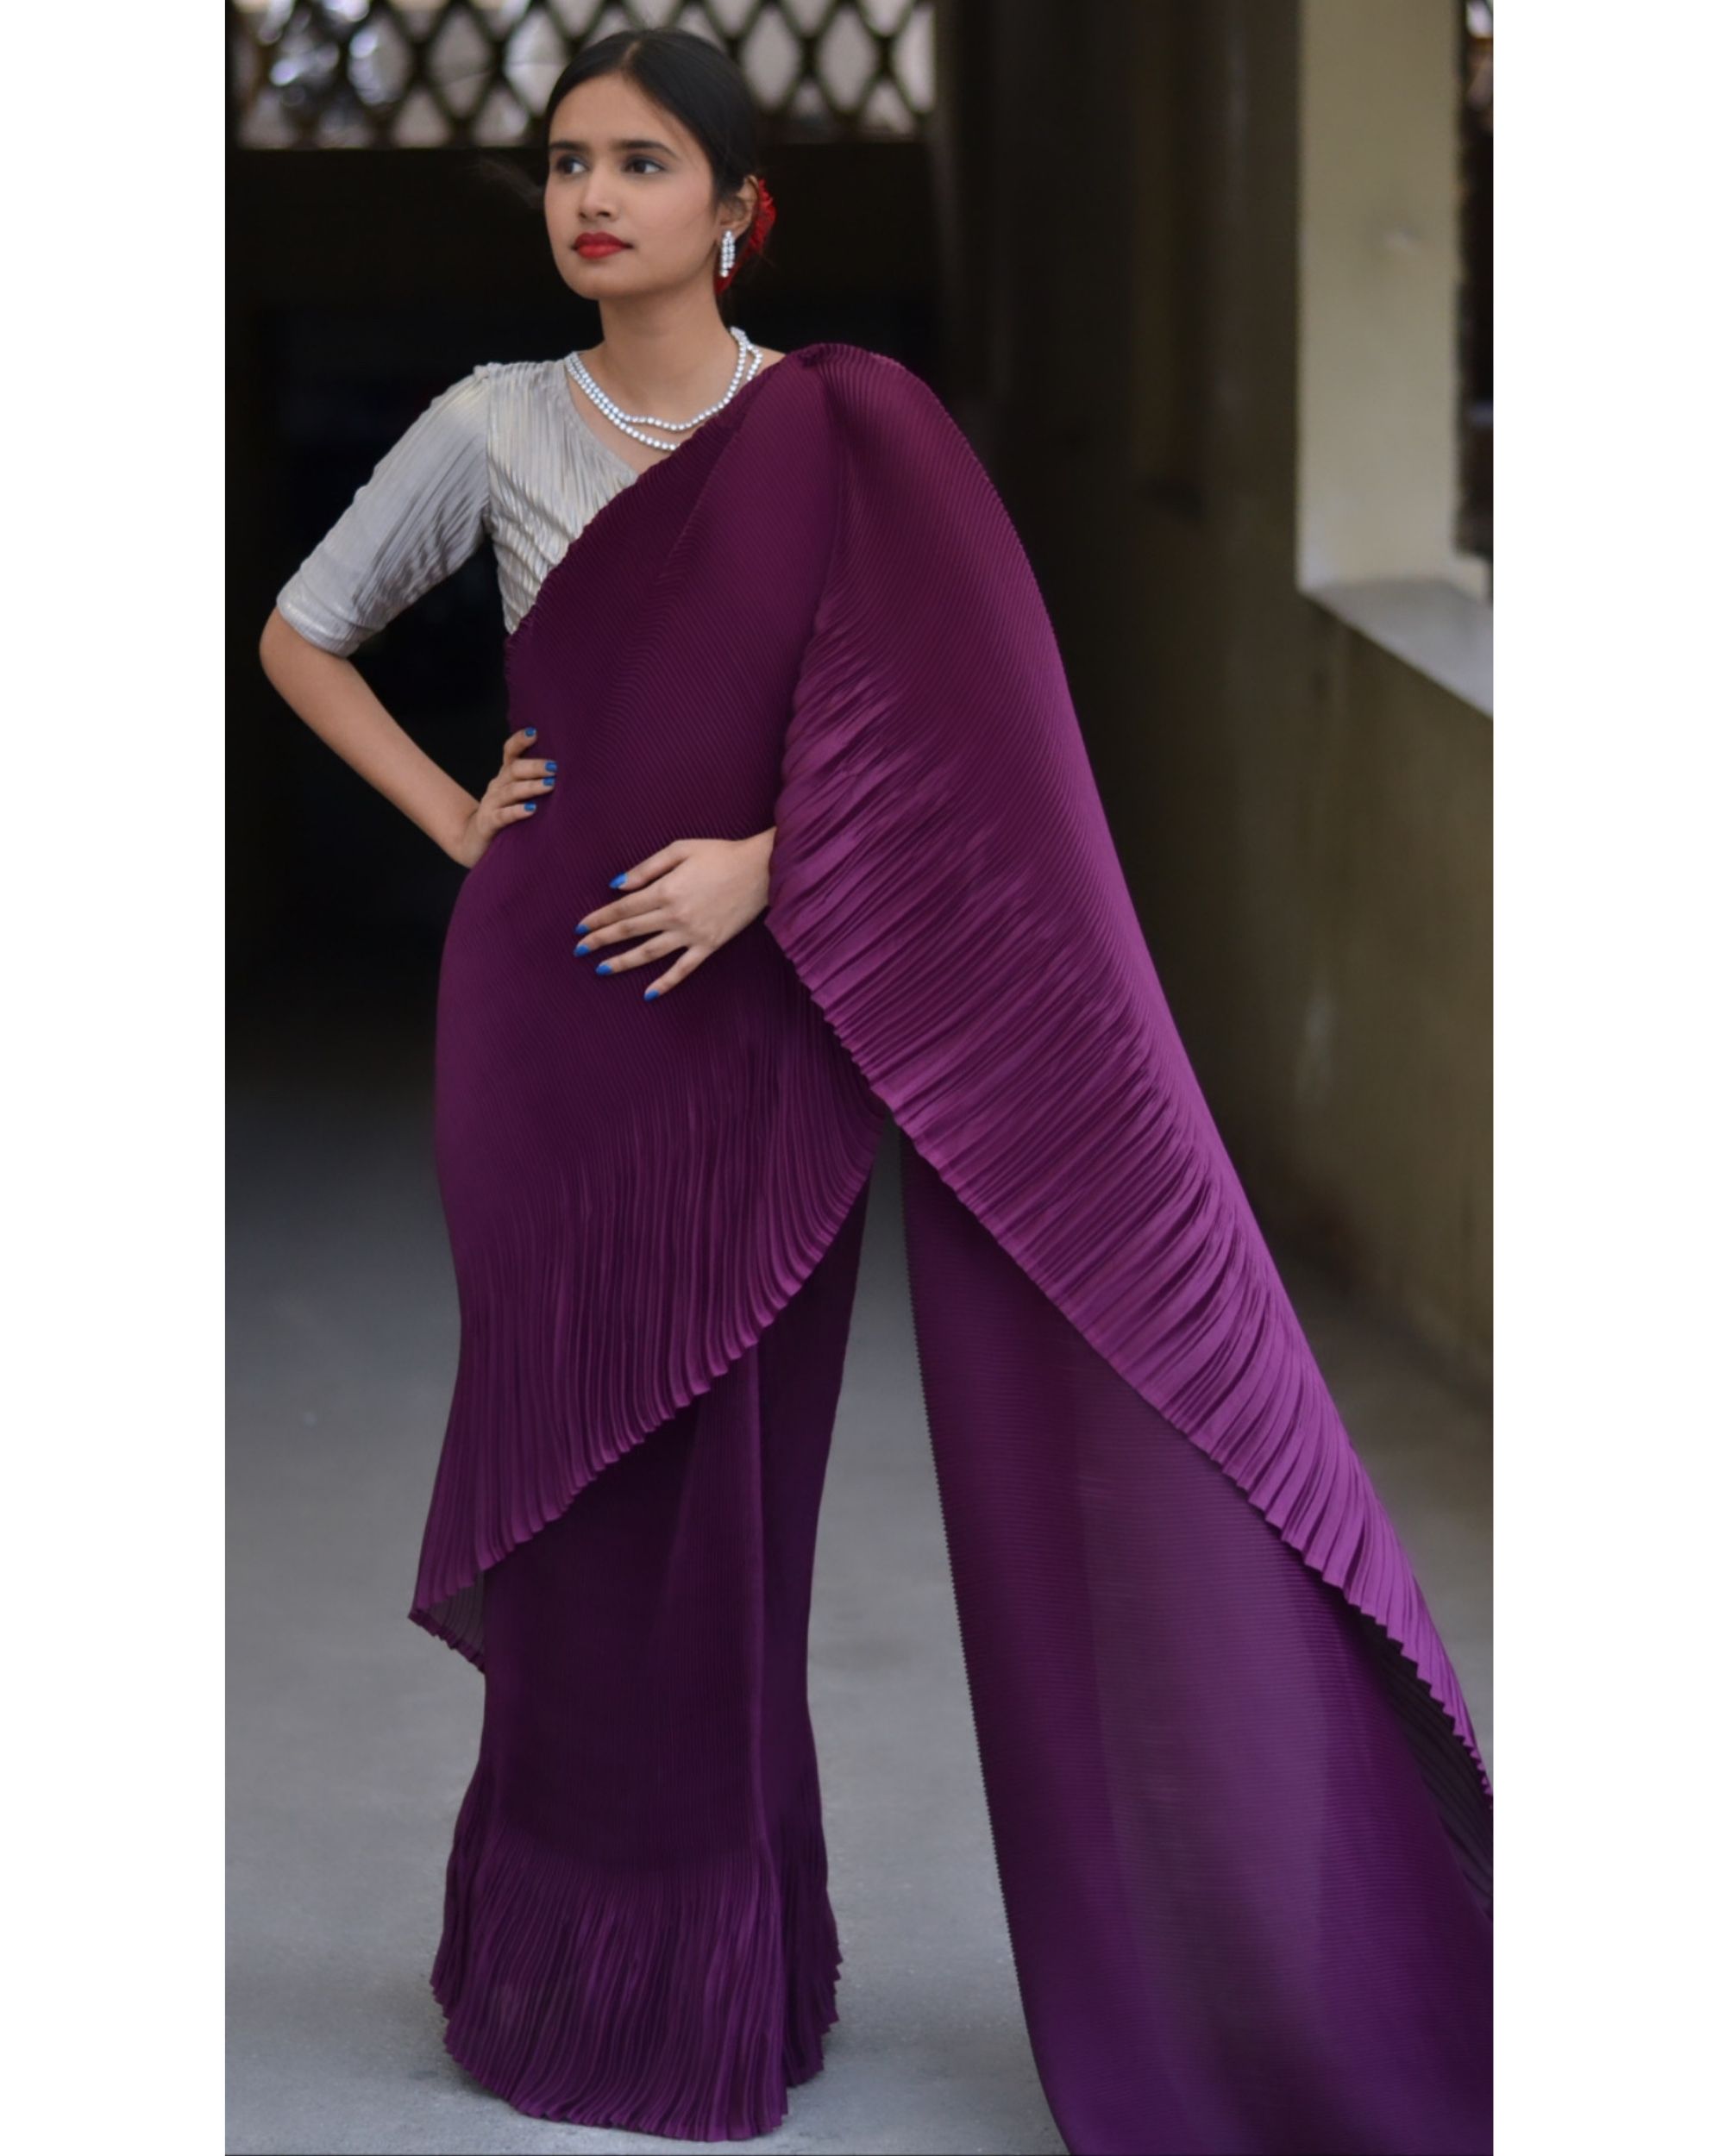 Dual Tone Purple Black Sari Fabric